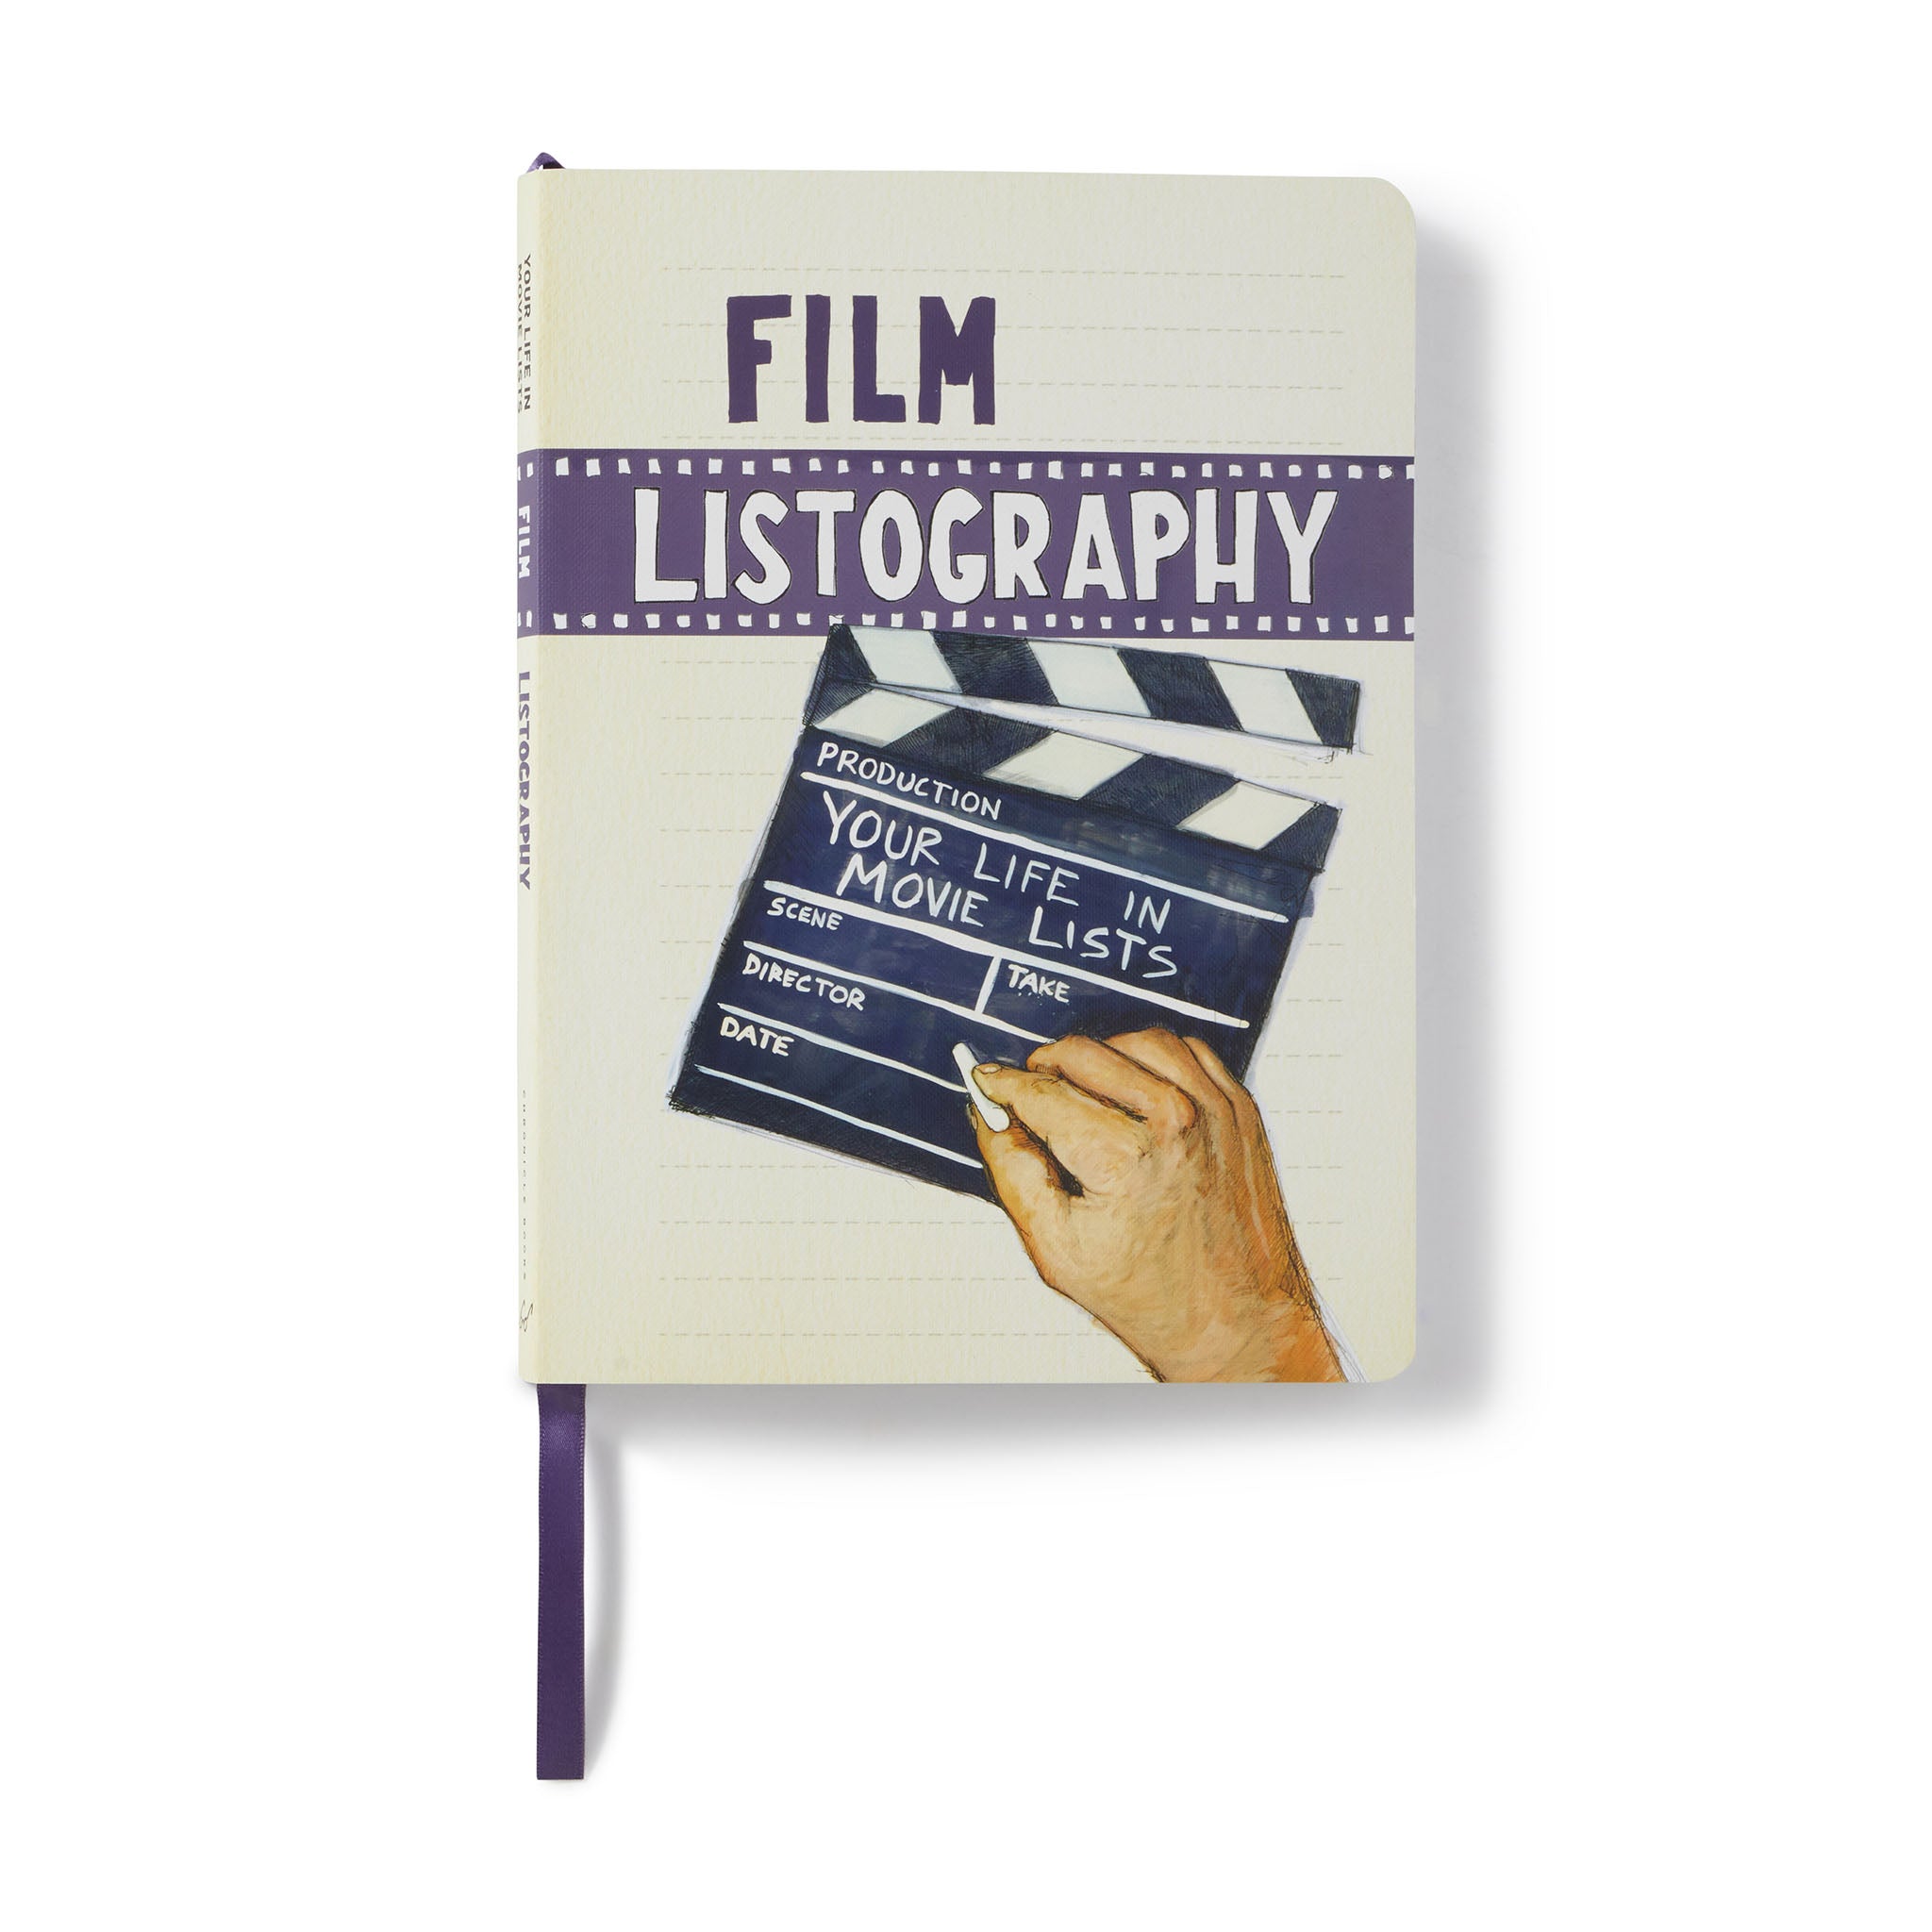 FILM LISTOGRAPHY